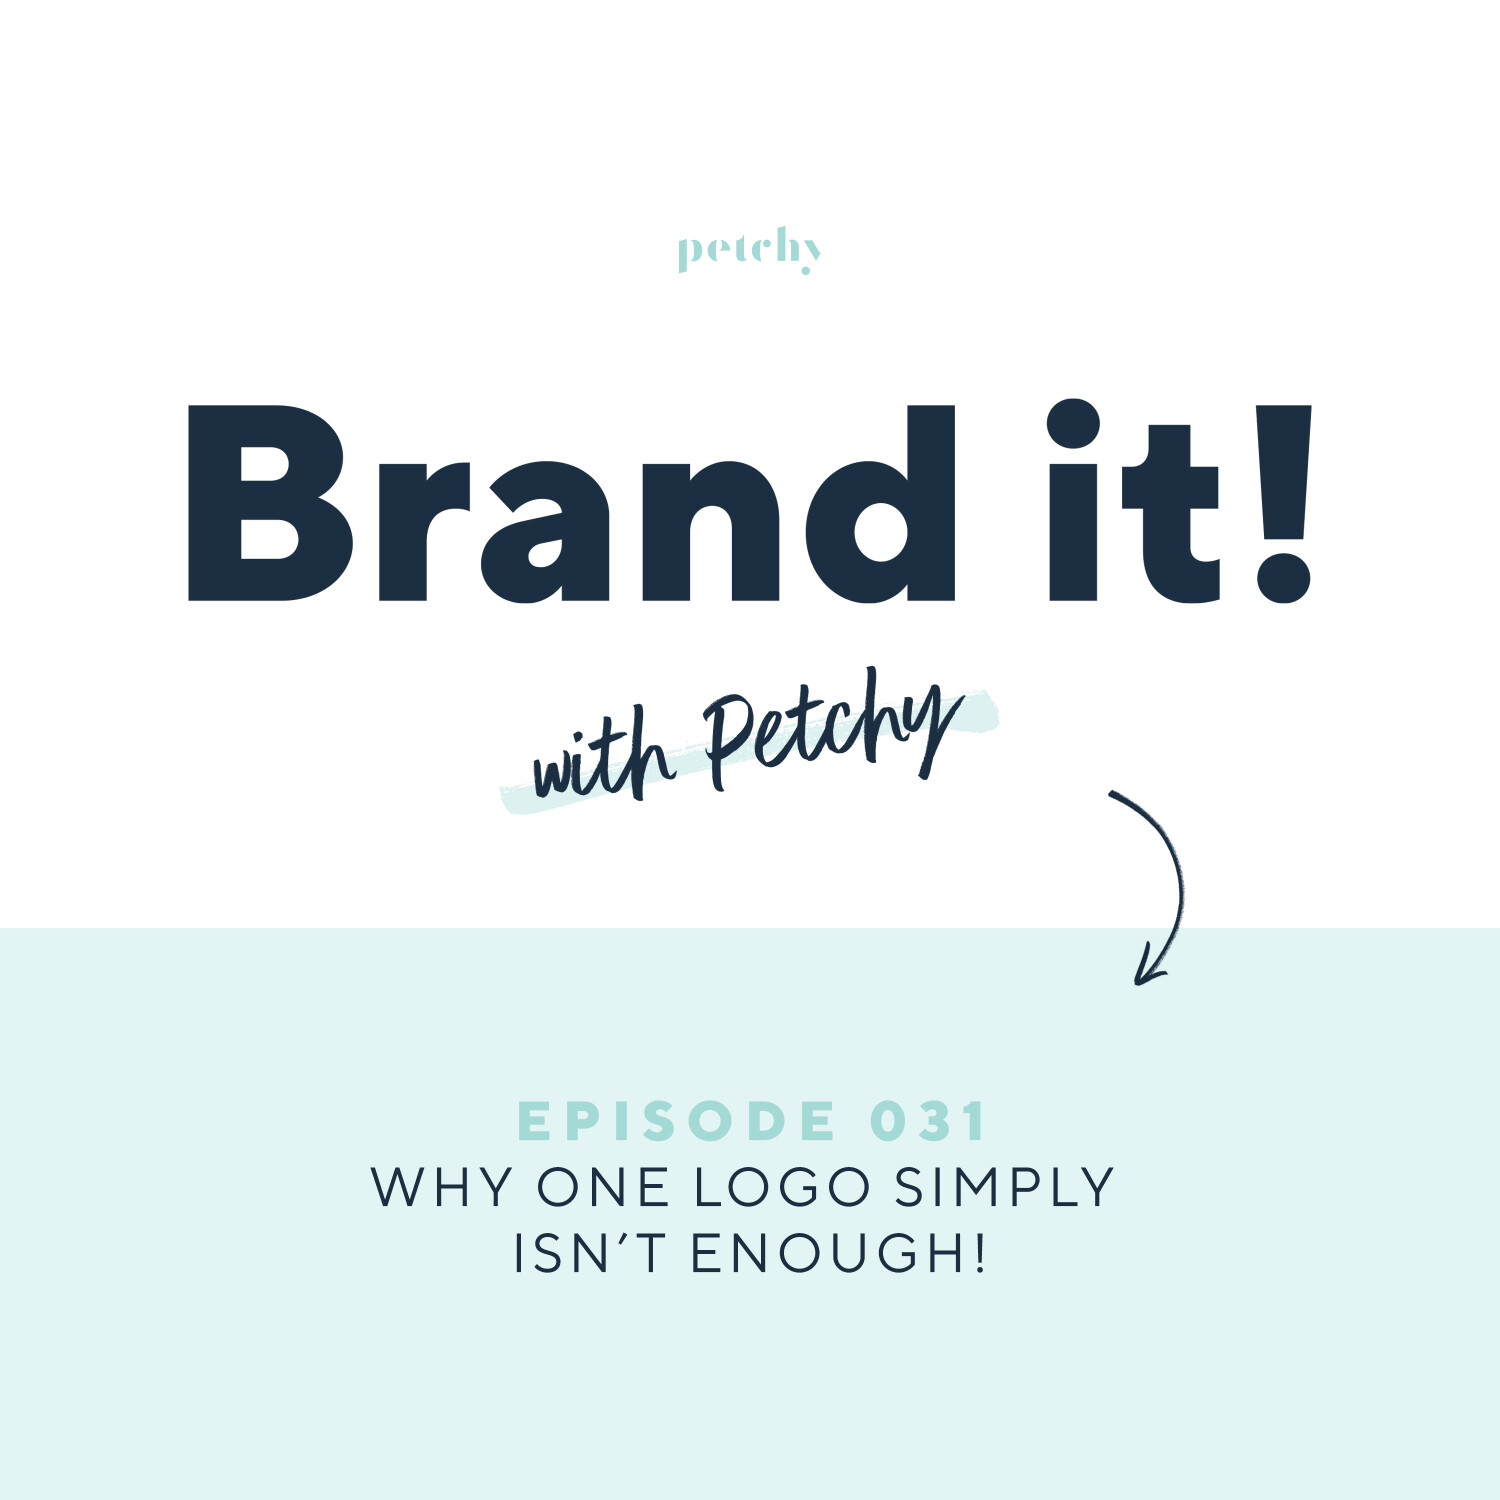 Why one logo simply isn’t enough!